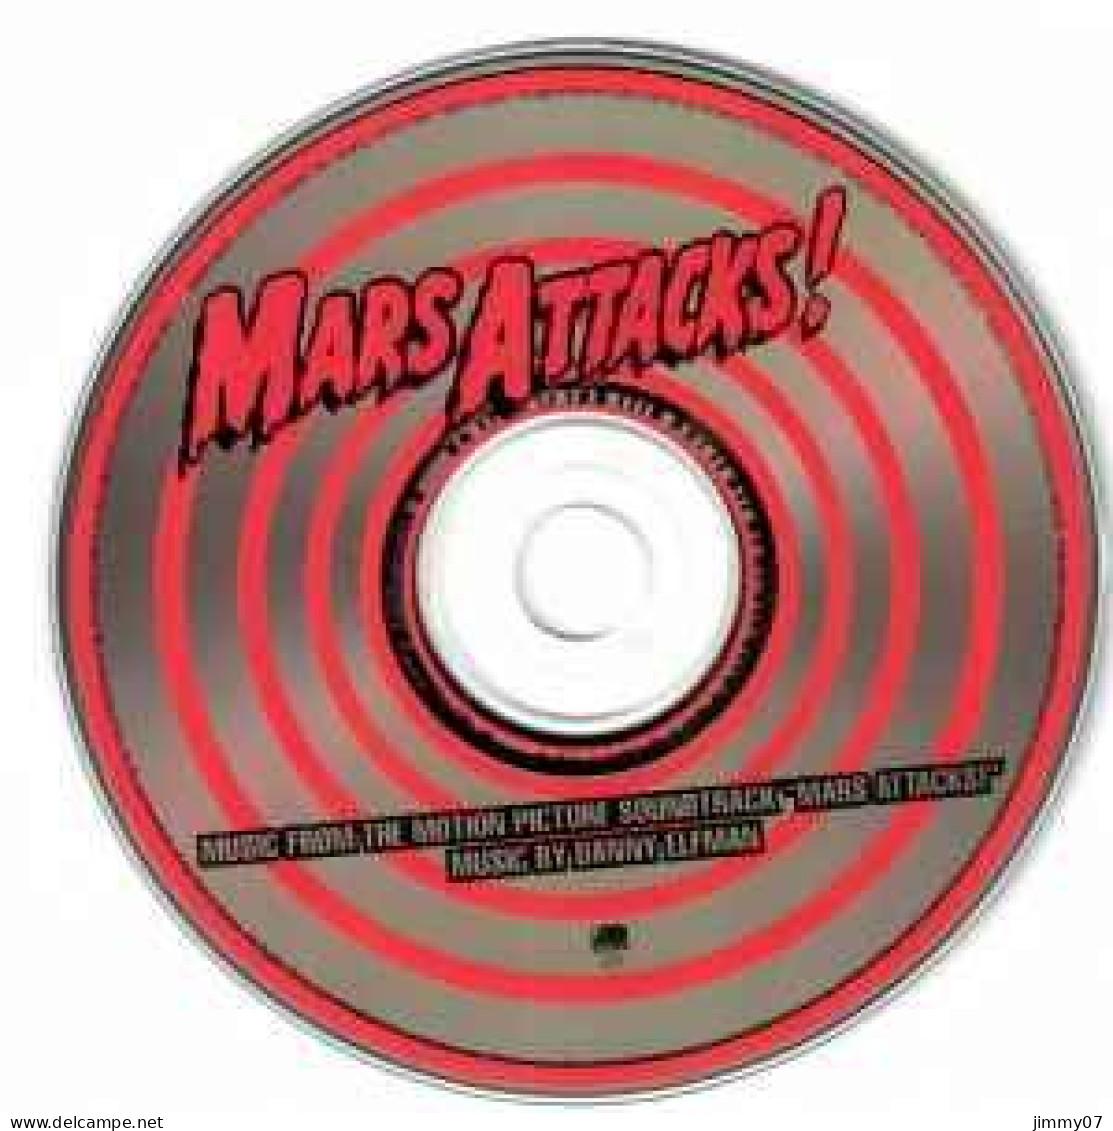 Danny Elfman - Mars Attacks! (Music From The Motion Picture Soundtrack) (CD, Album) - Filmmuziek